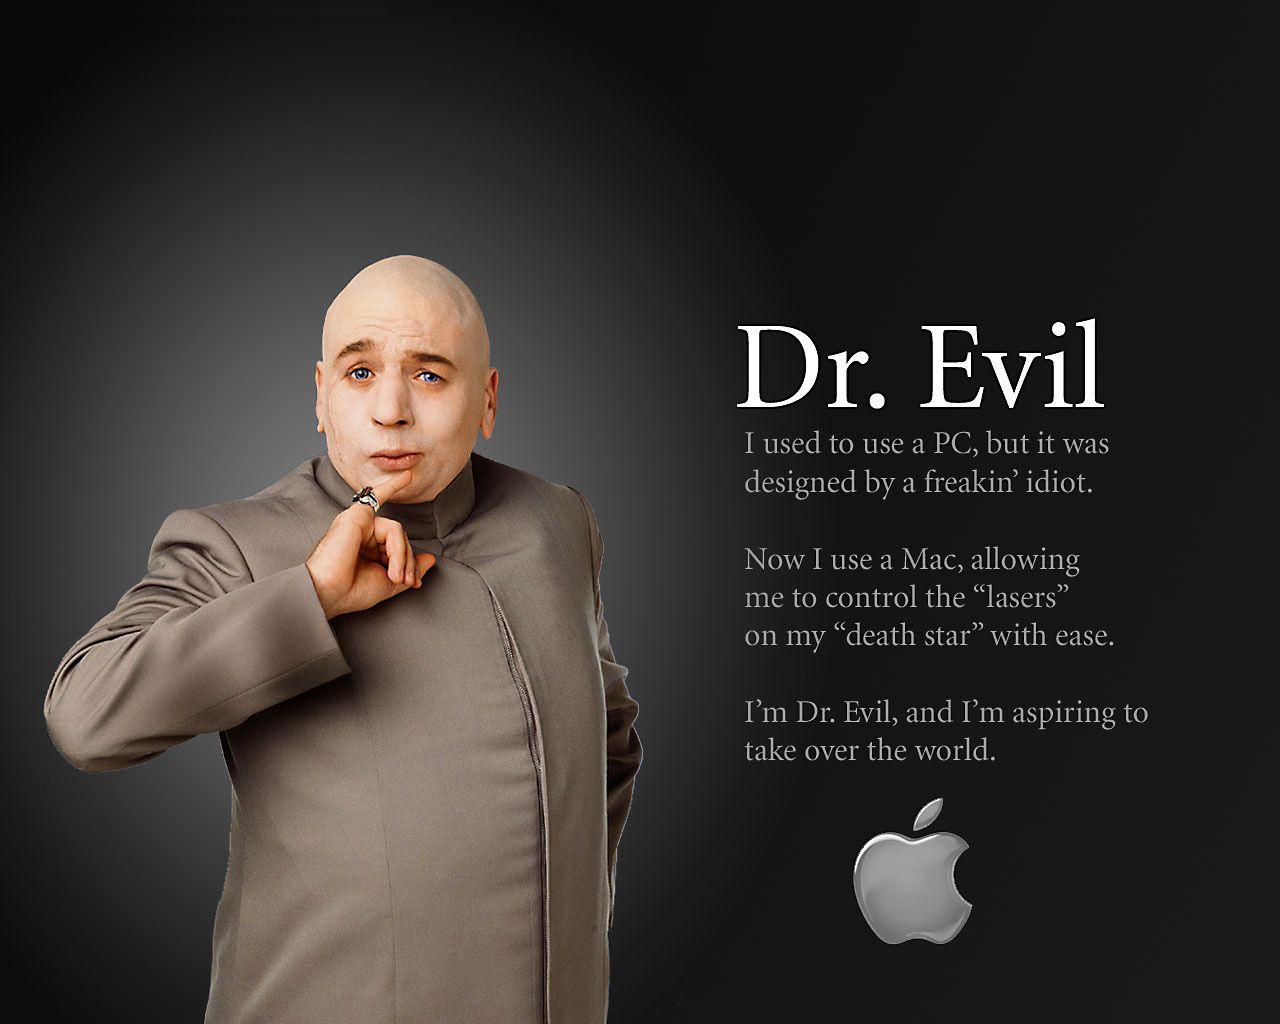 Dr. Evil image Dr. Evil HD wallpaper and background photo